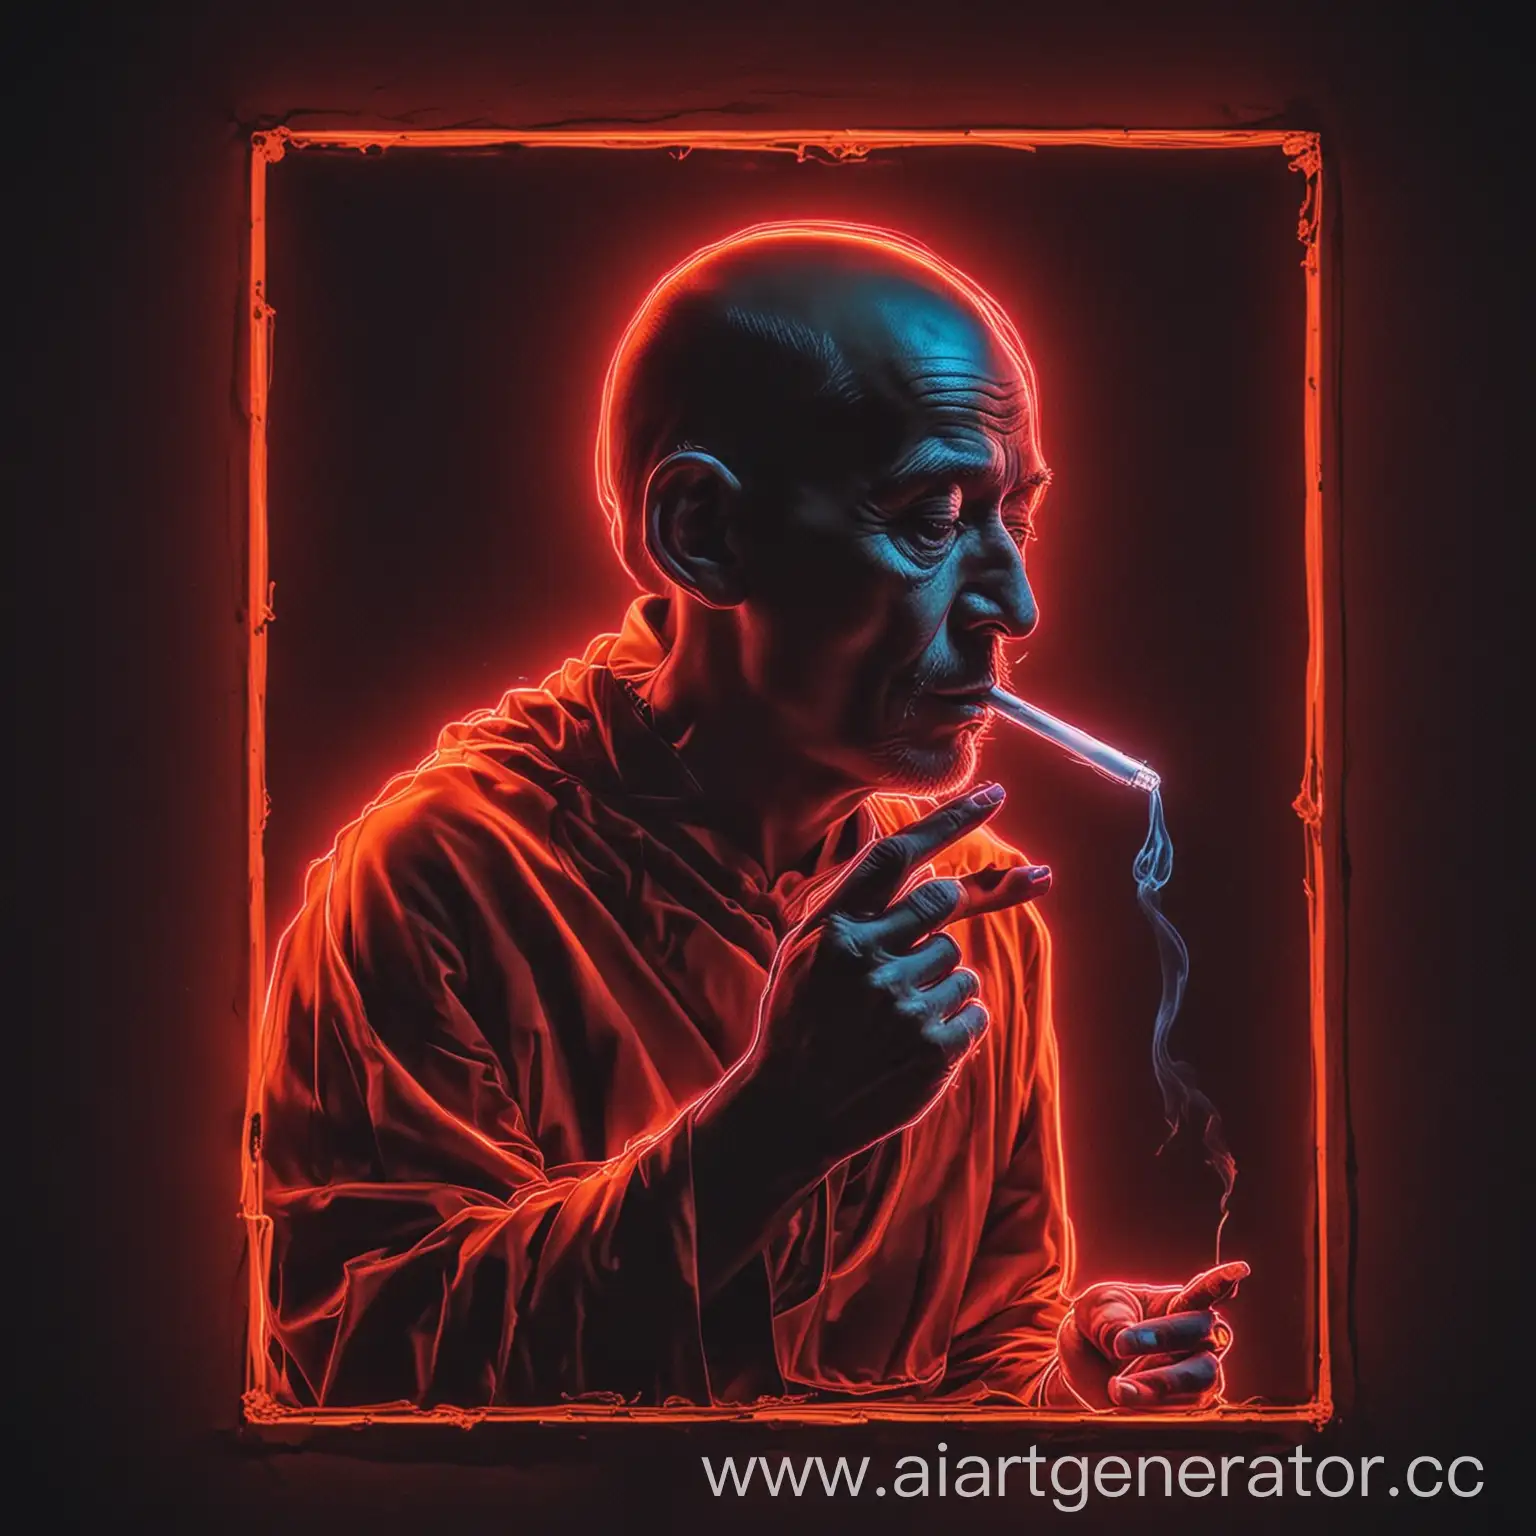 Neon-Monk-Smoking-a-Cigarette-Urban-Artistic-Depiction